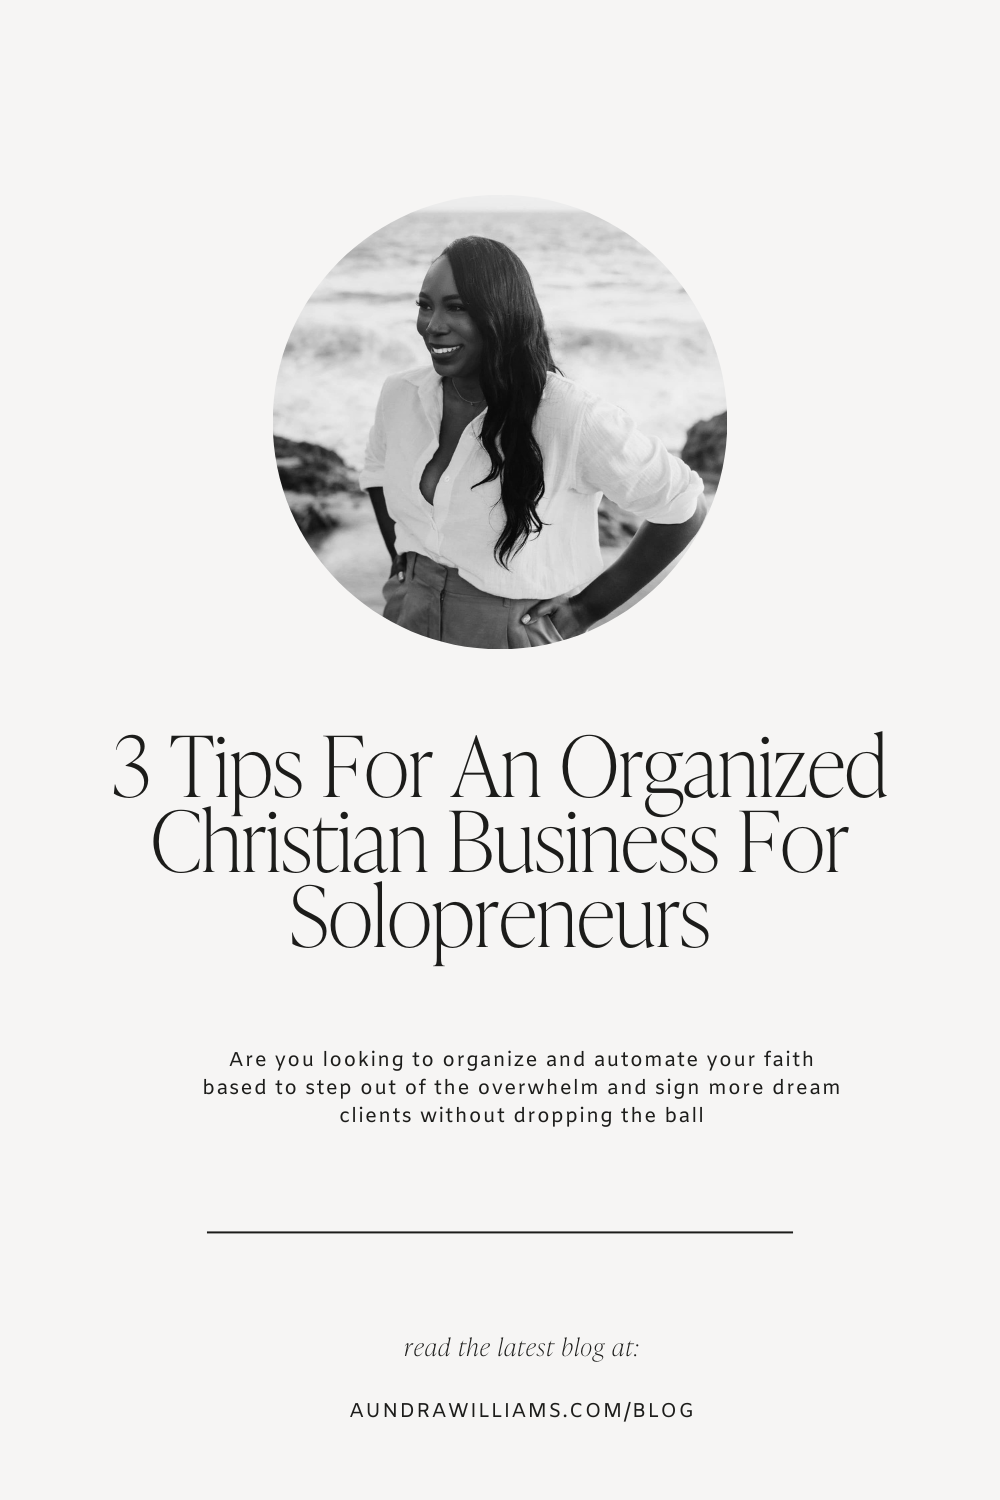 3 Tips For An Organized Christian Business For Solopreneurs